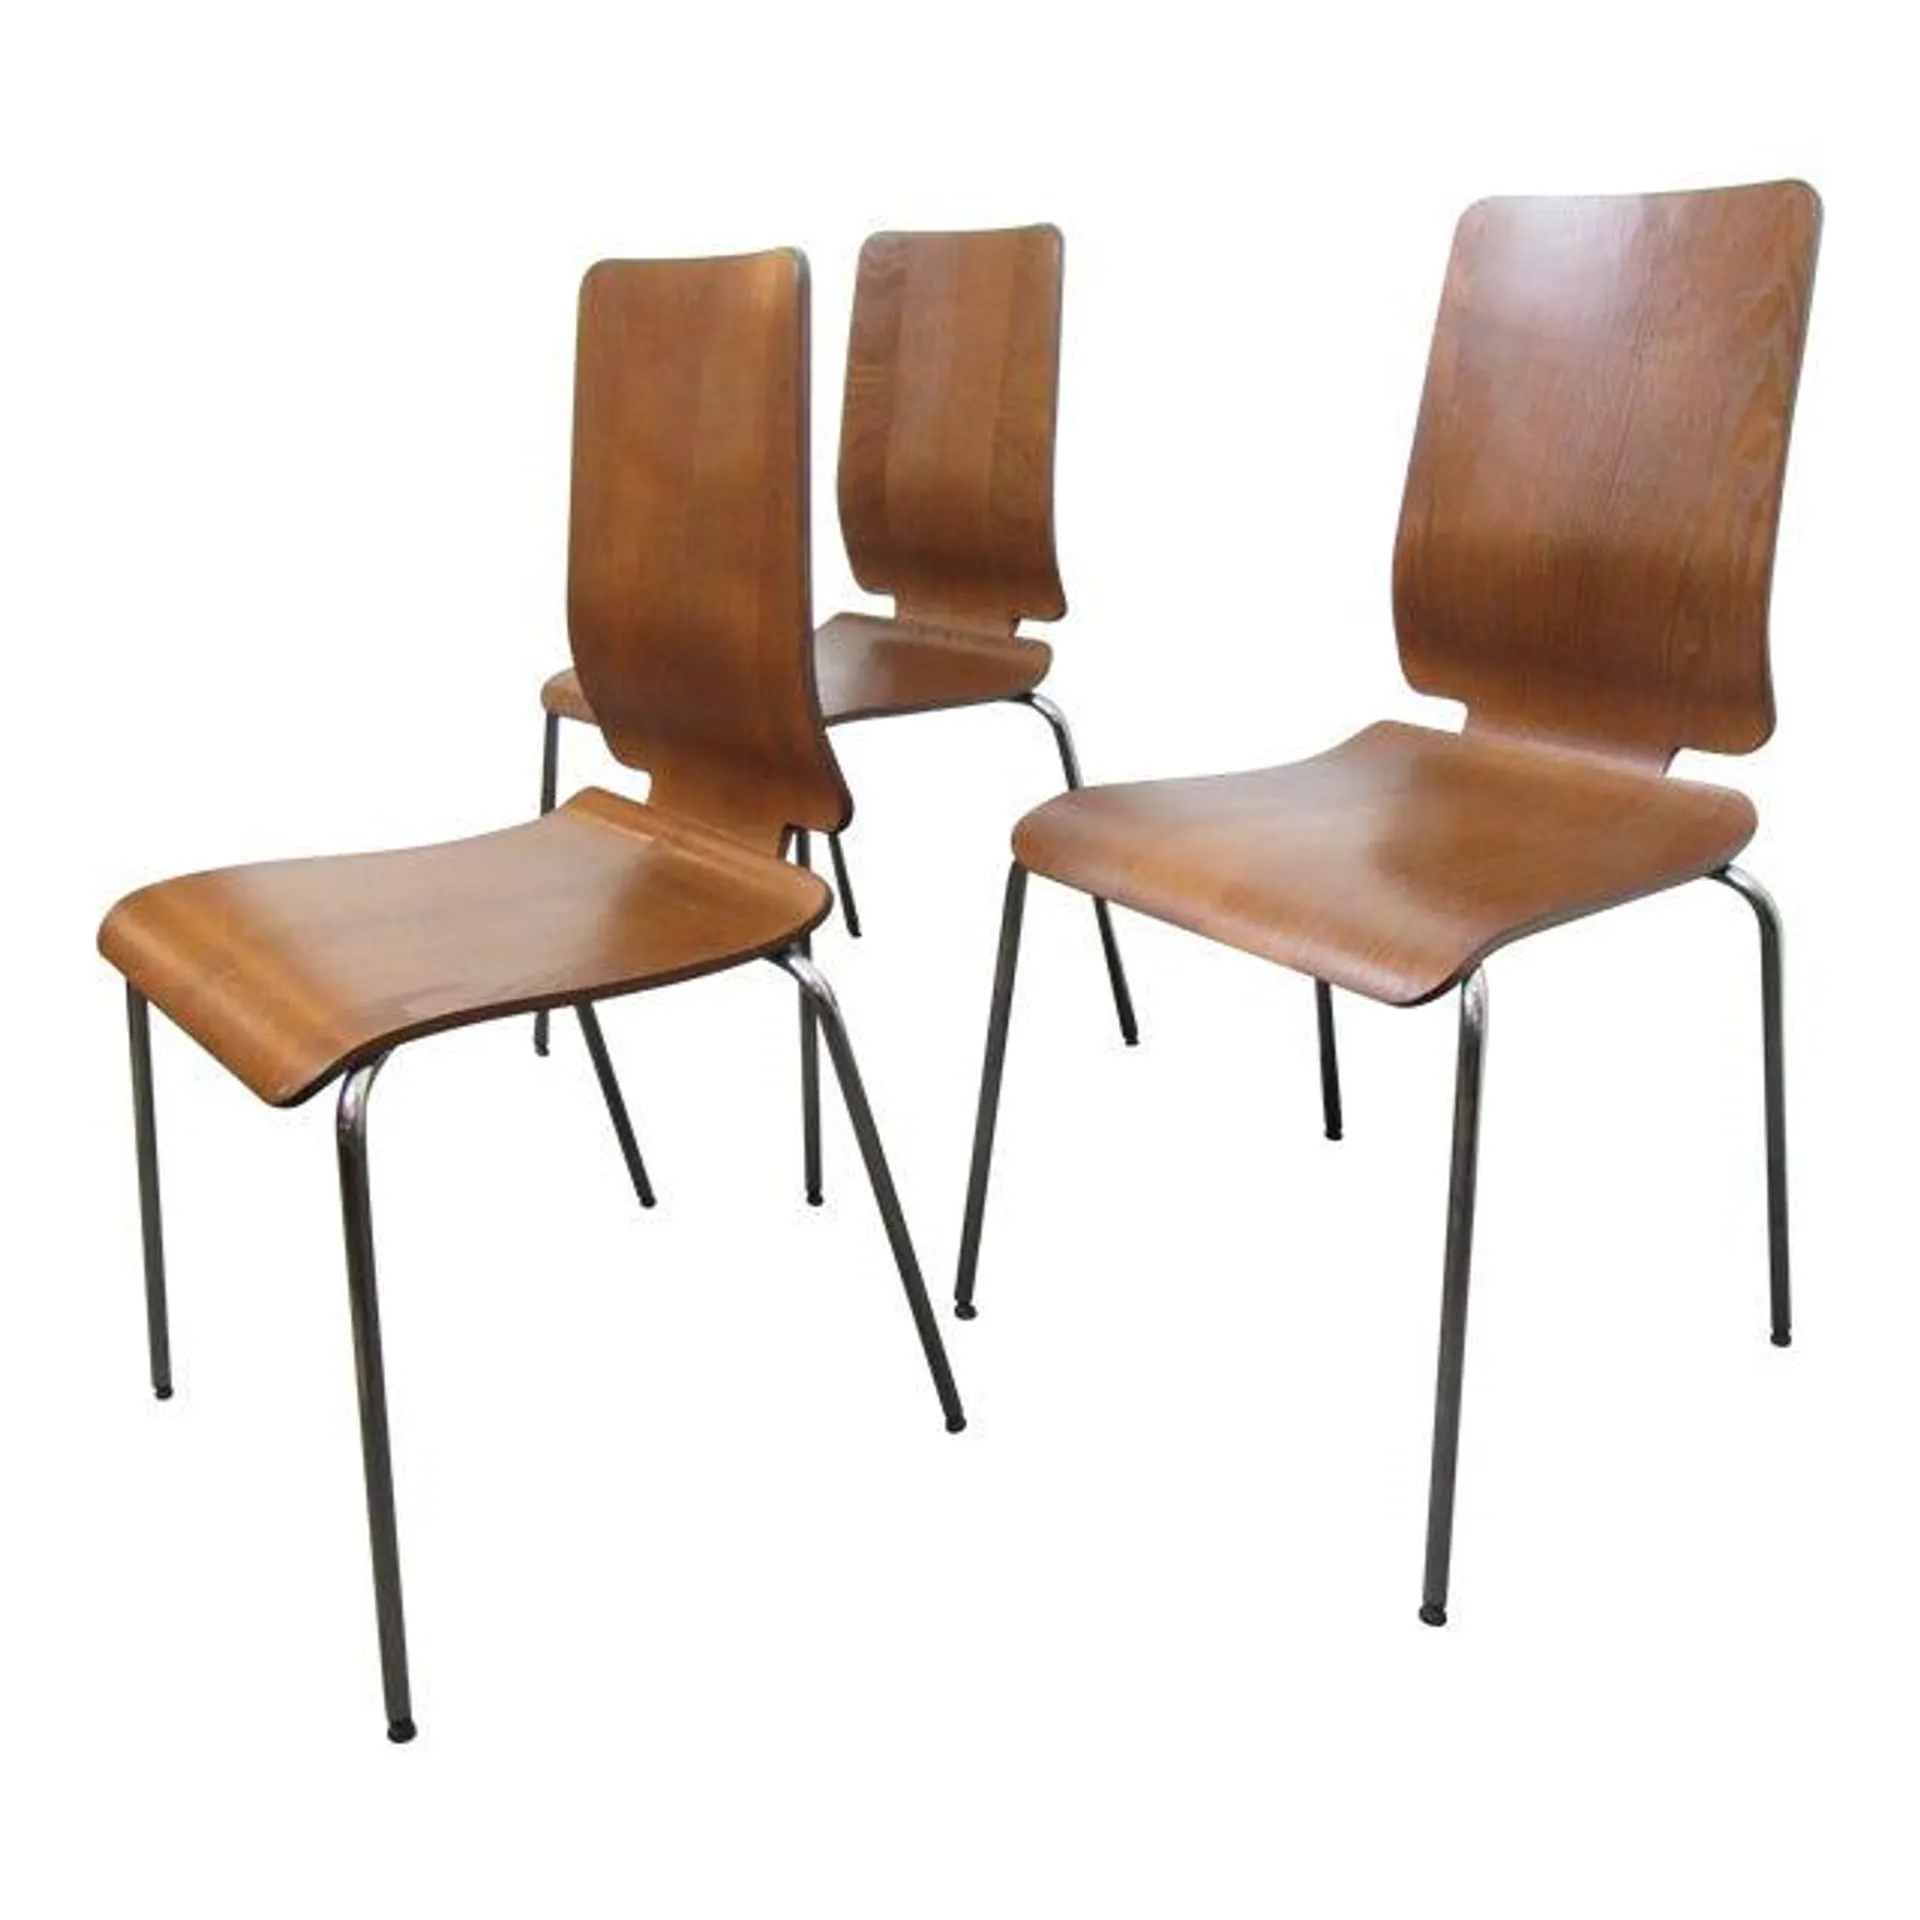 Three Mid-Century Modern Bent Plywood Chairs